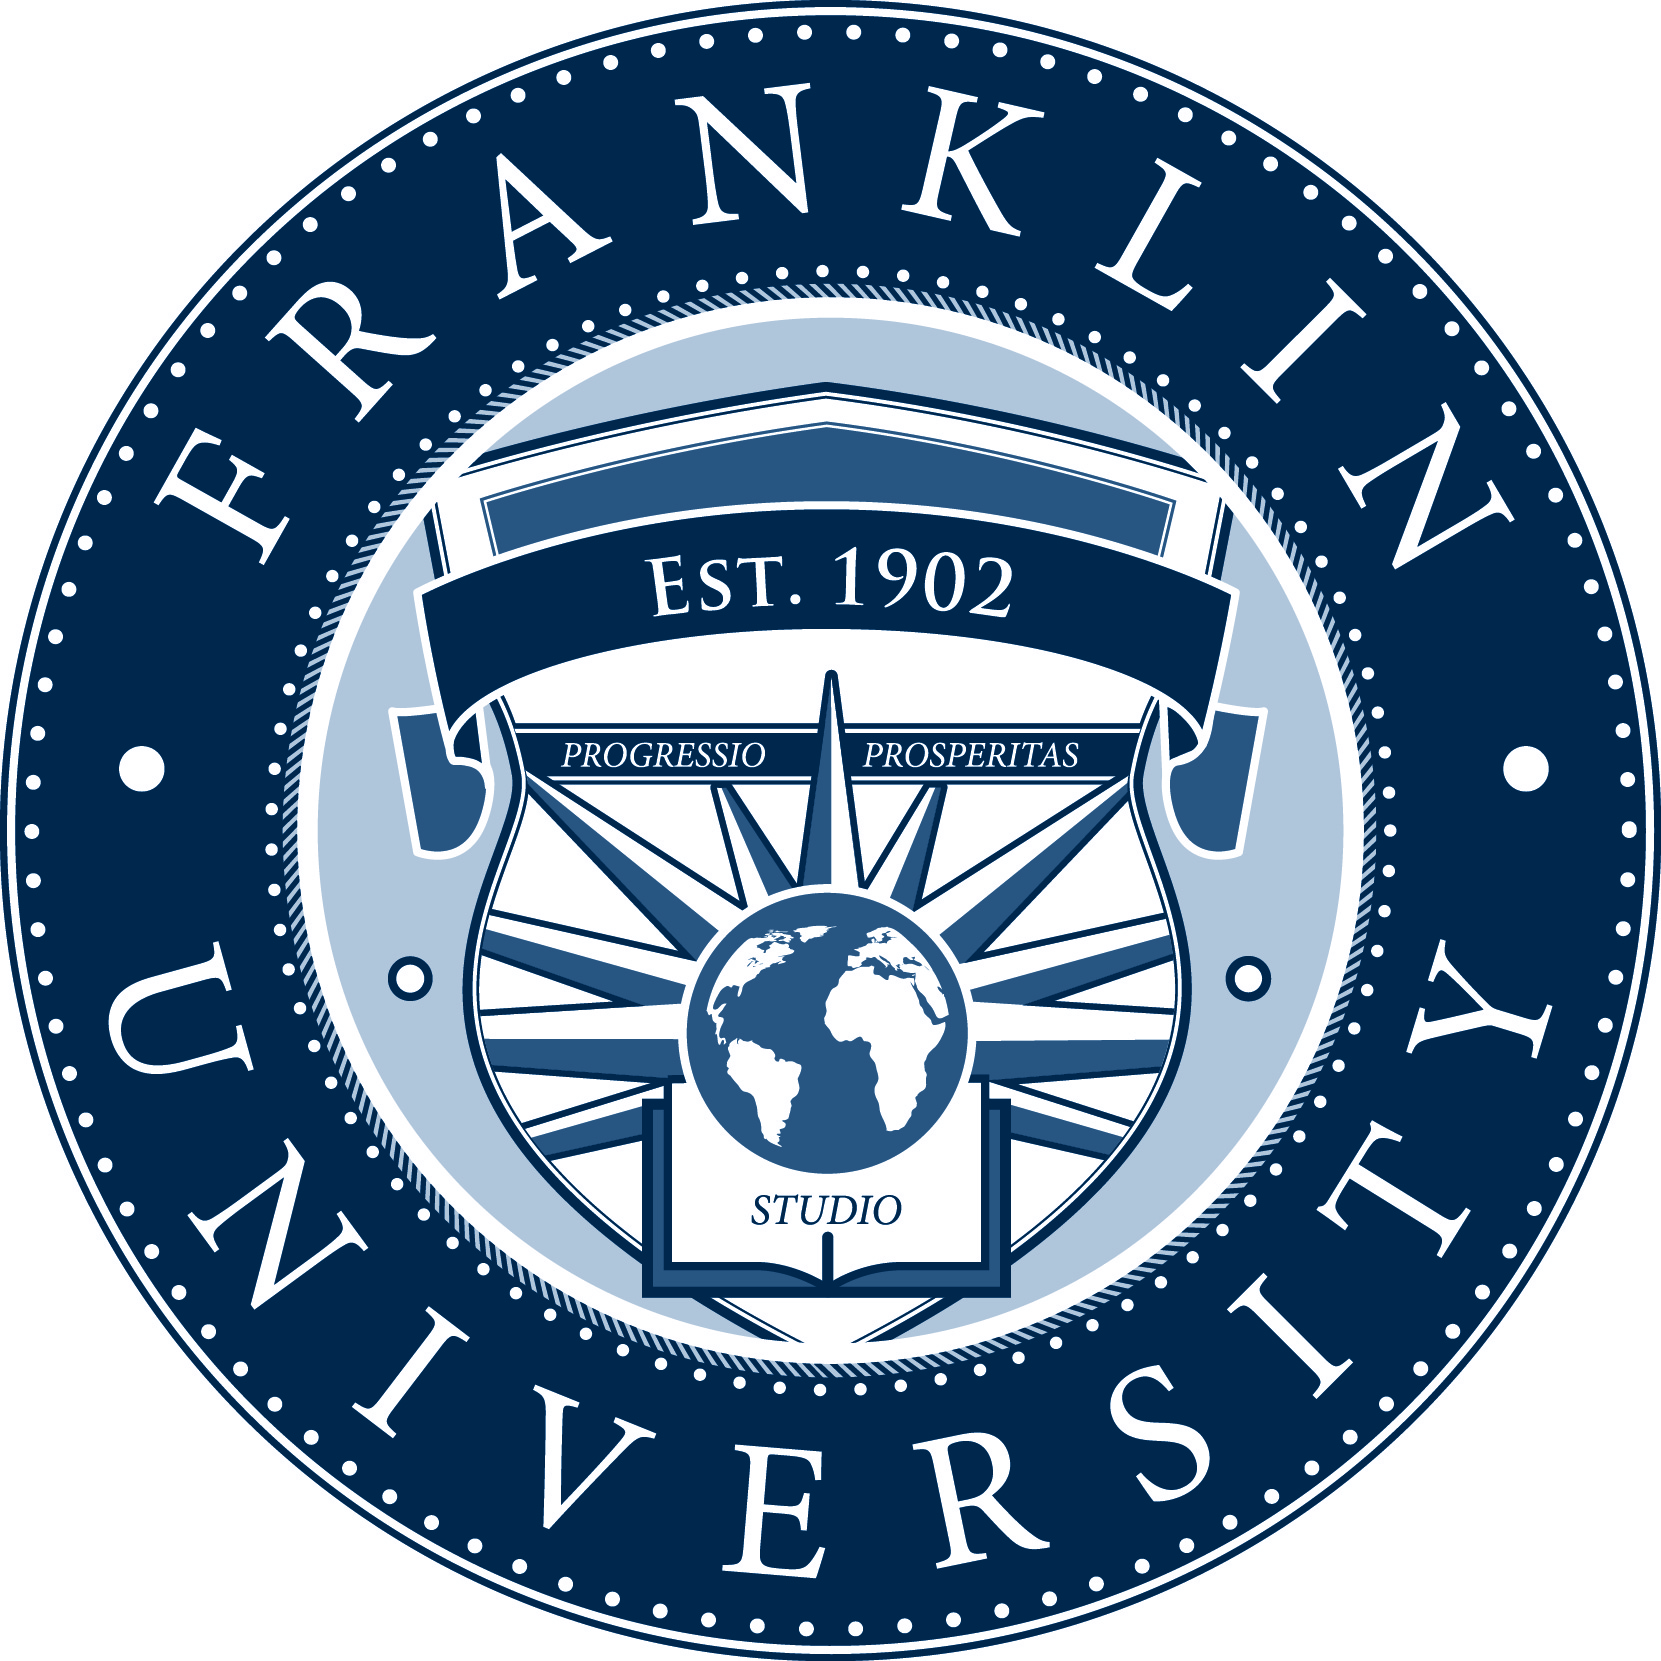 Franklin University MBA Program Celebrates Its 20 Years